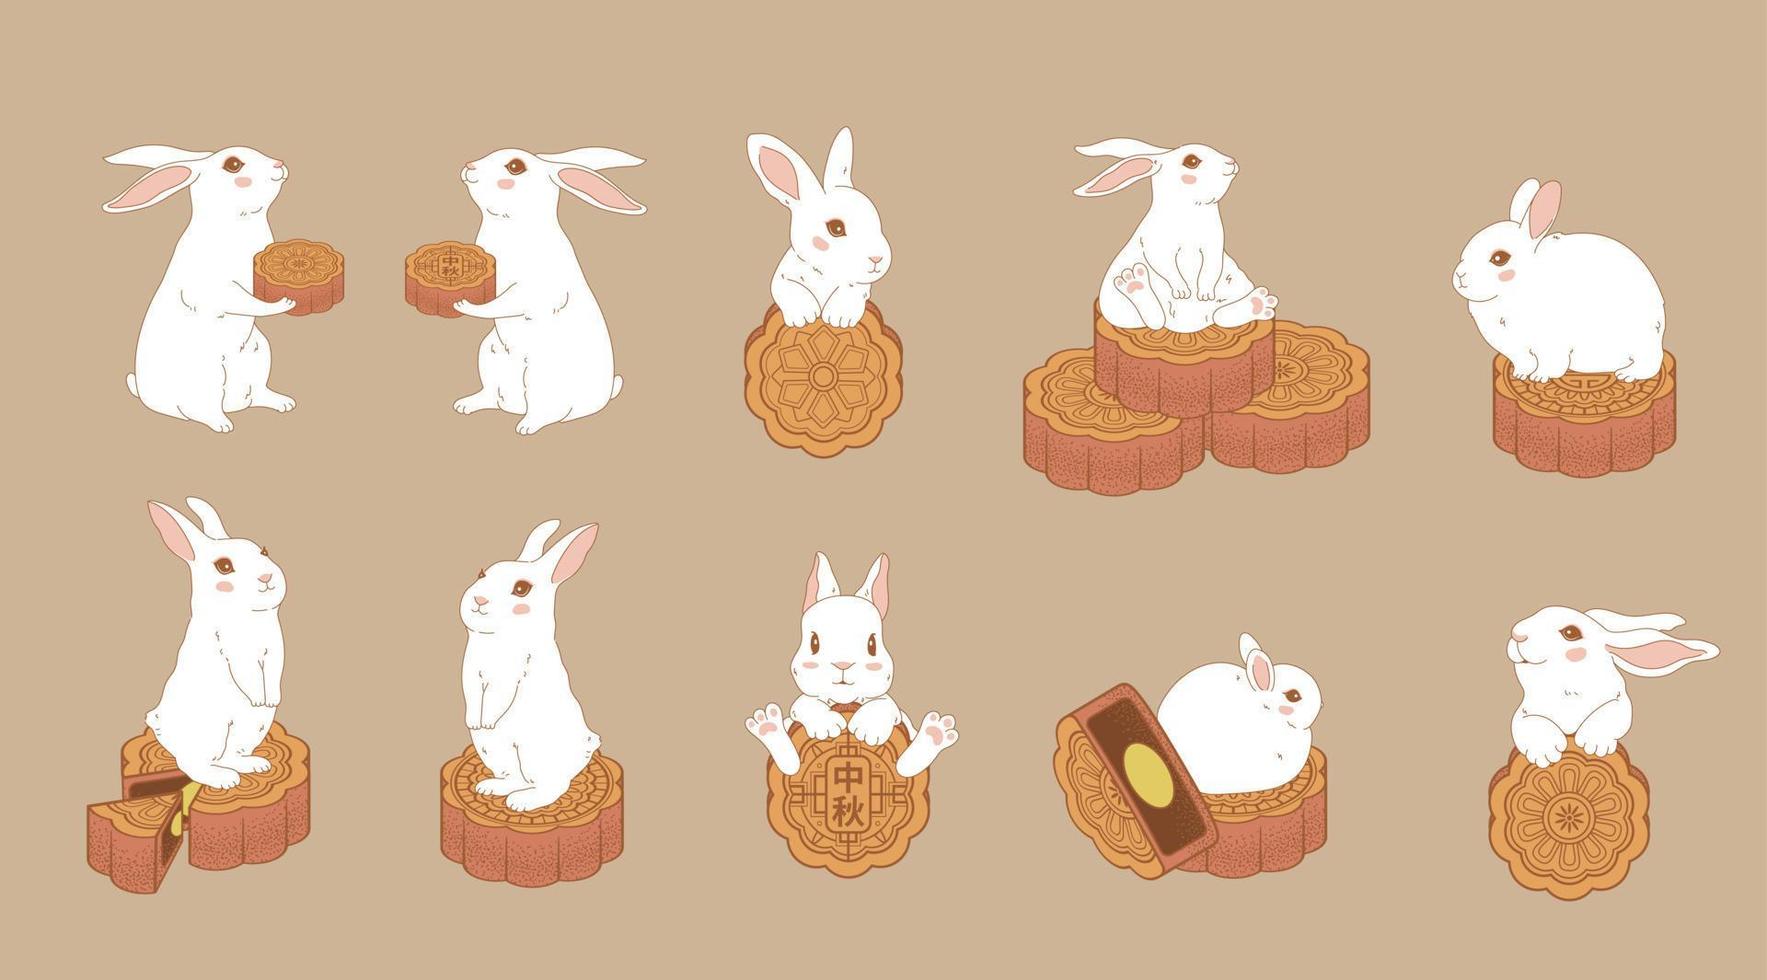 Rabbit with Mooncake for mid-autumn festival celebration vector